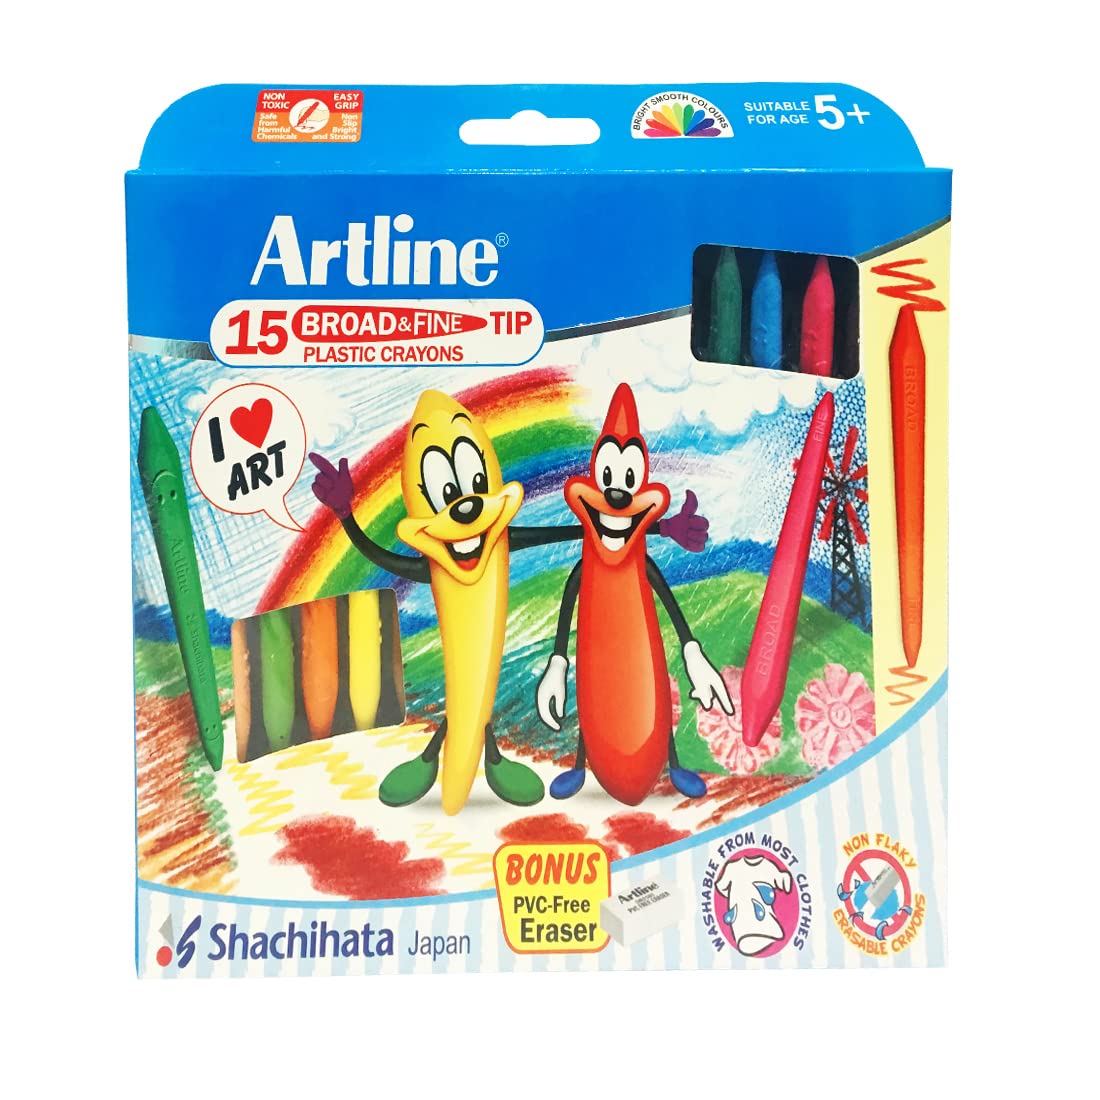 Artline Broad & Fine Tip Plastic Crayons Pack Of 15